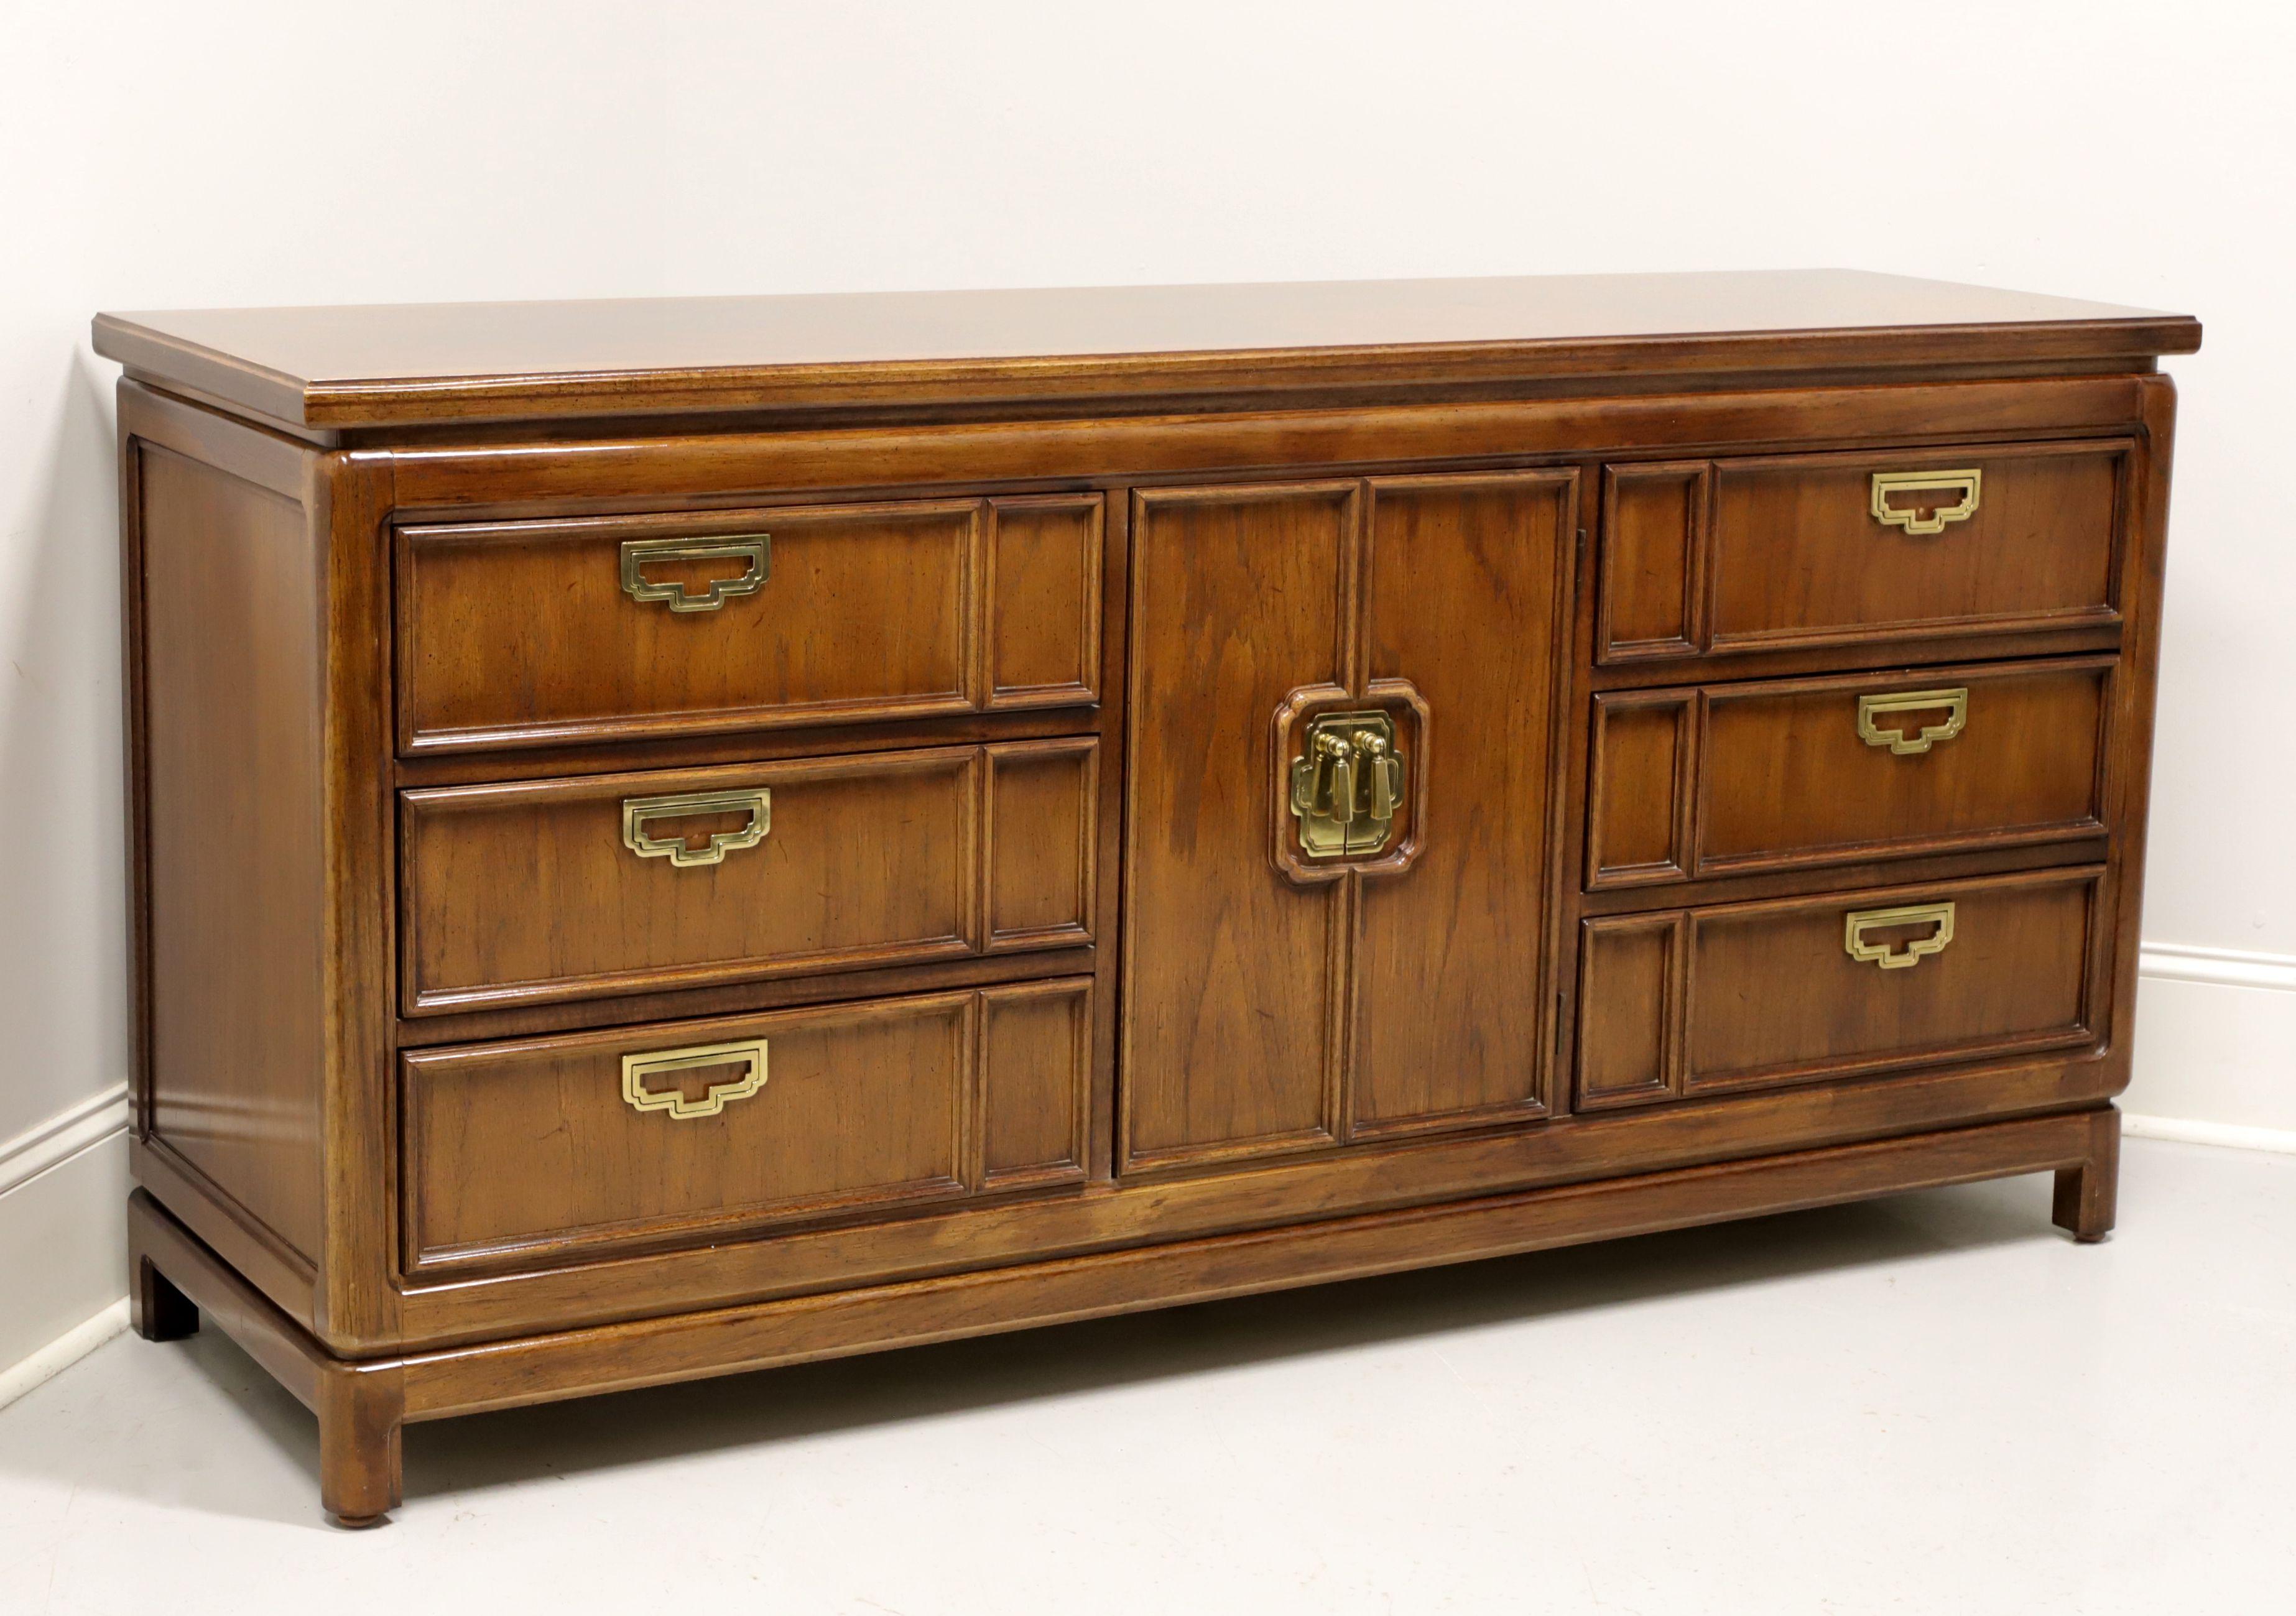 THOMASVILLE Mystique Oak Parquetry Asian Influenced Dresser 3